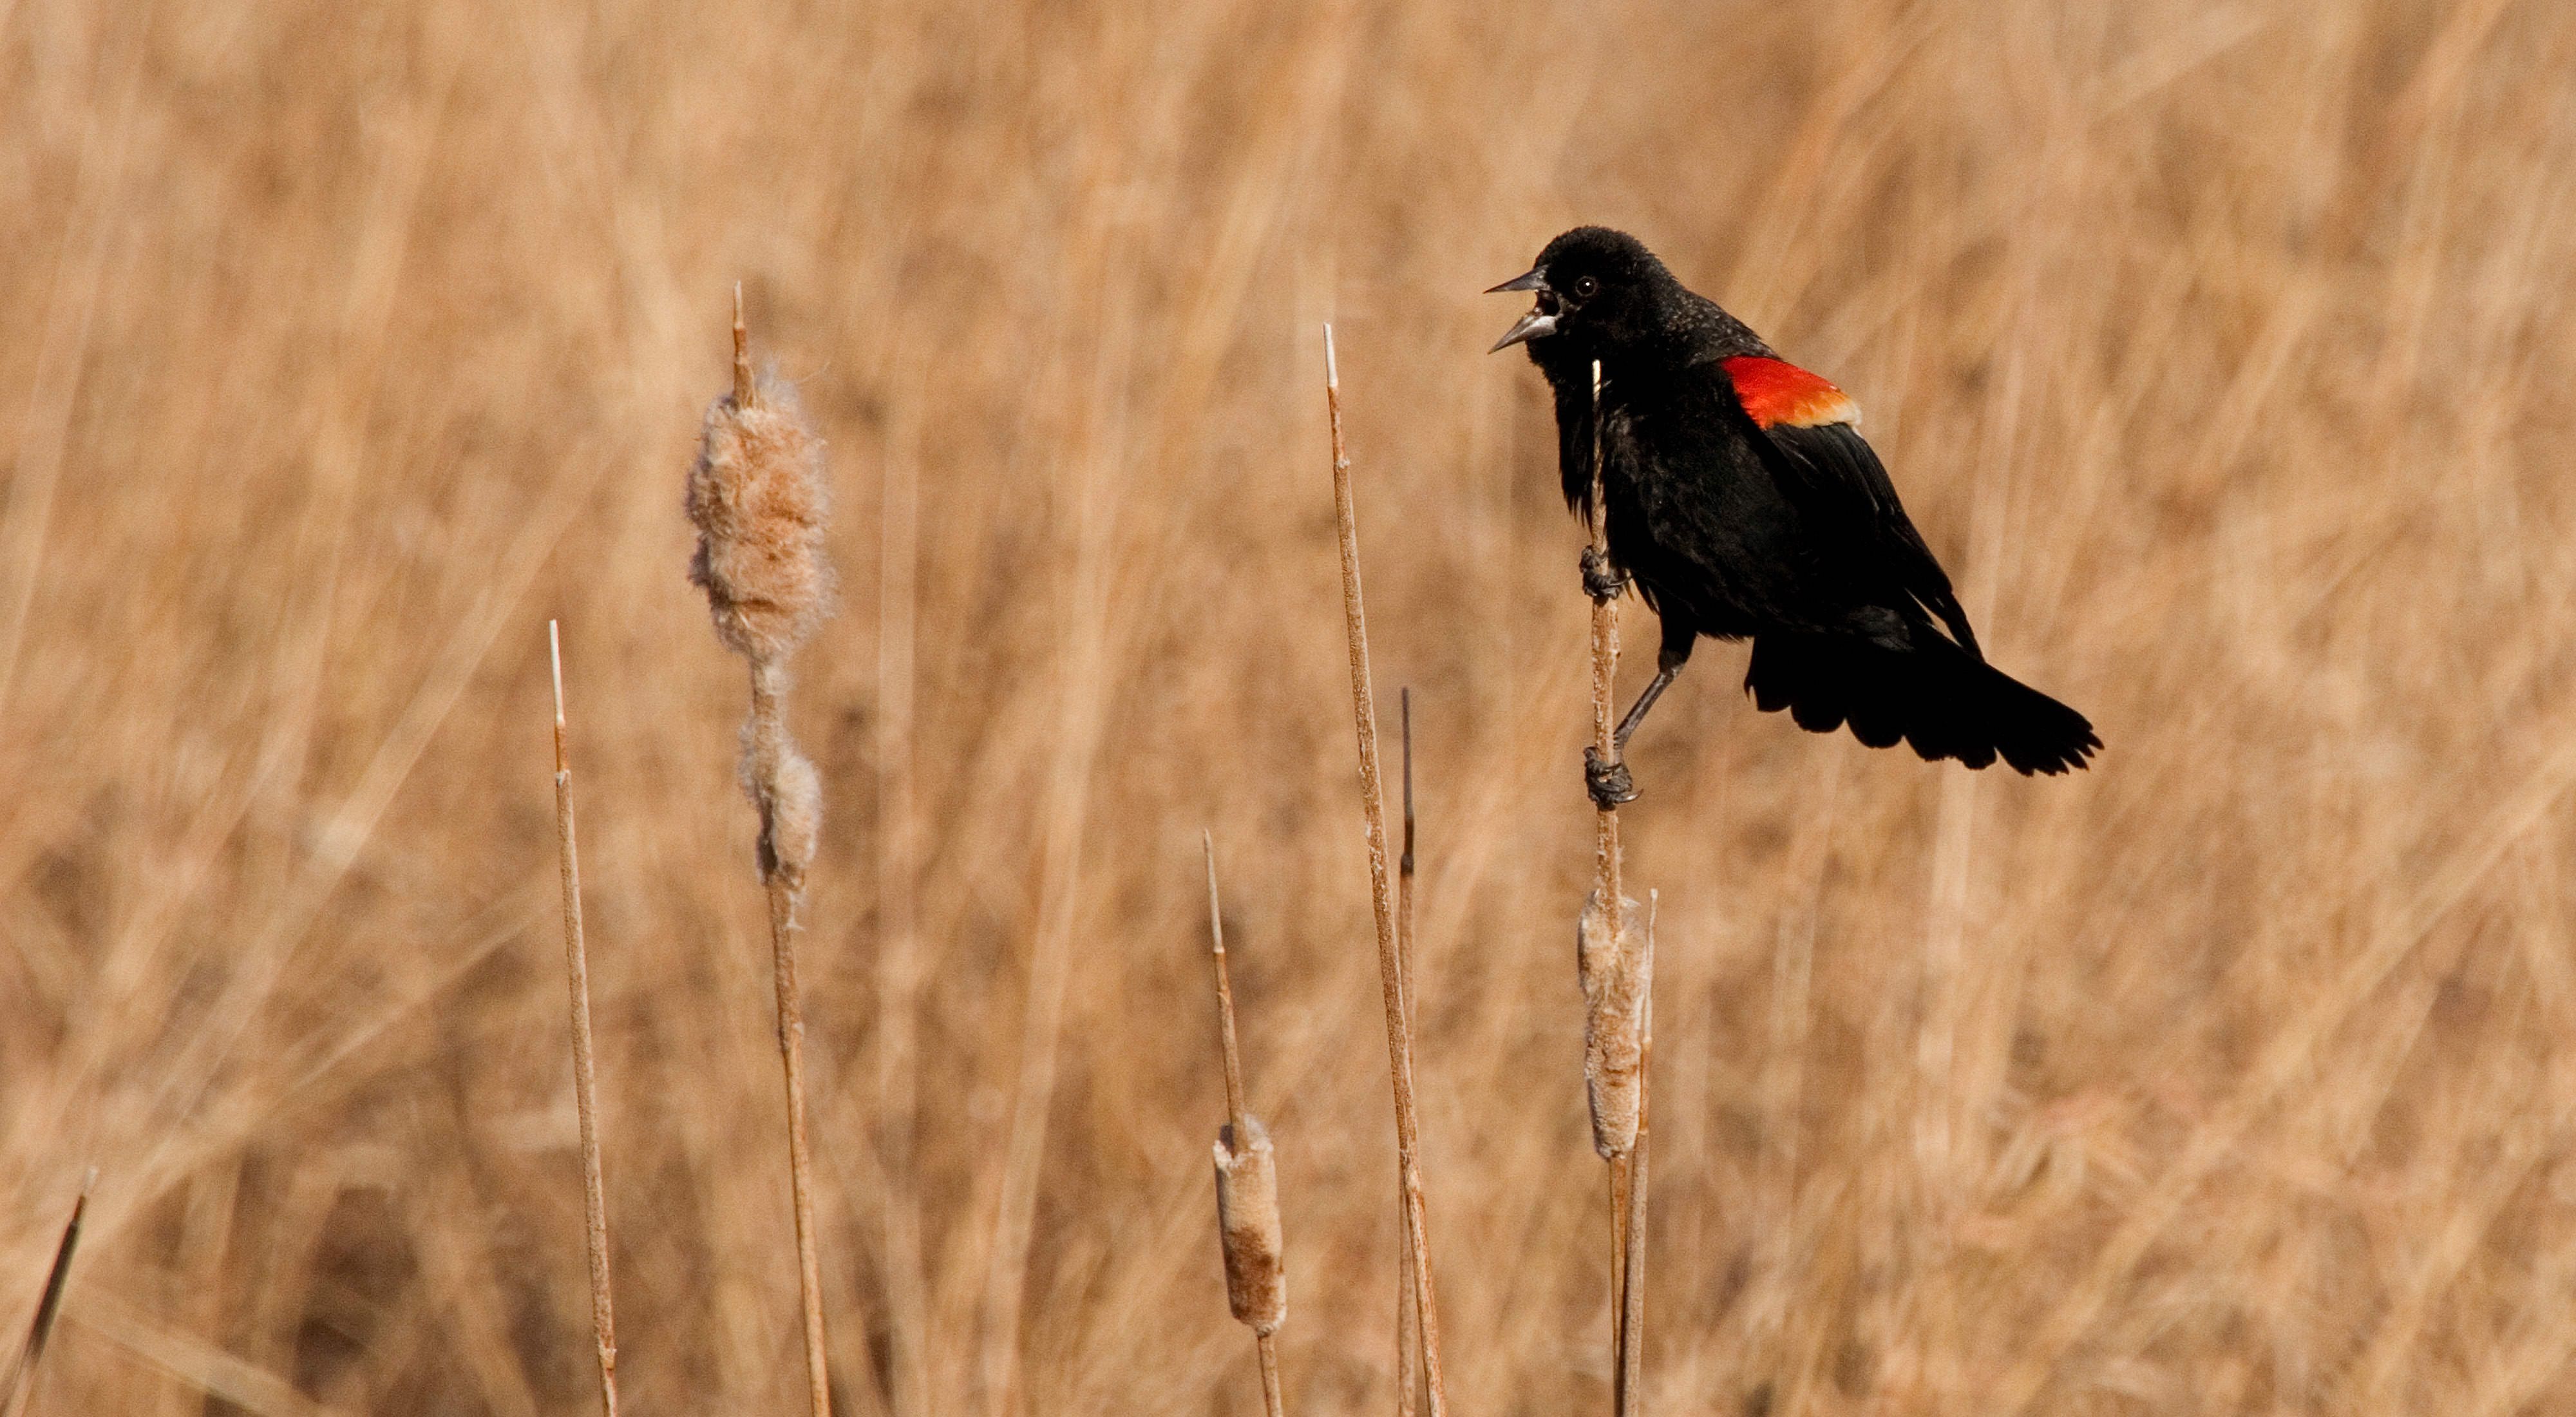 Red Winged Blackbird